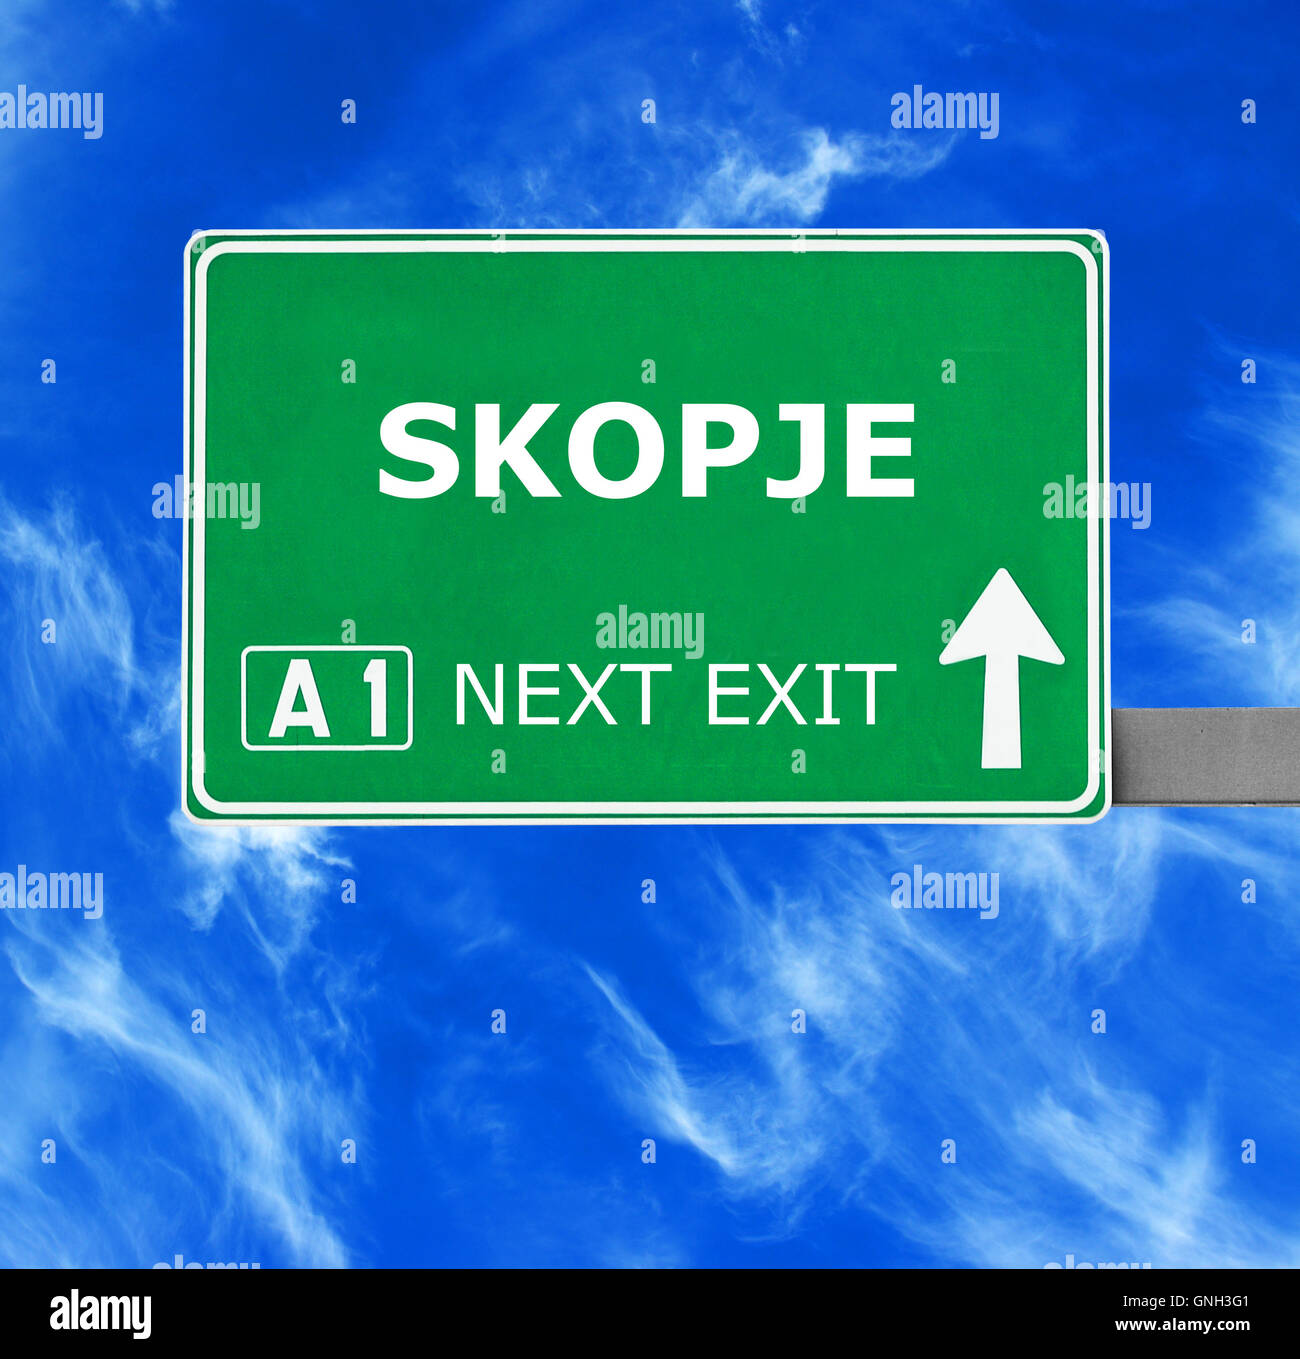 SKOPJE-Schild gegen klar blauen Himmel Stockfoto